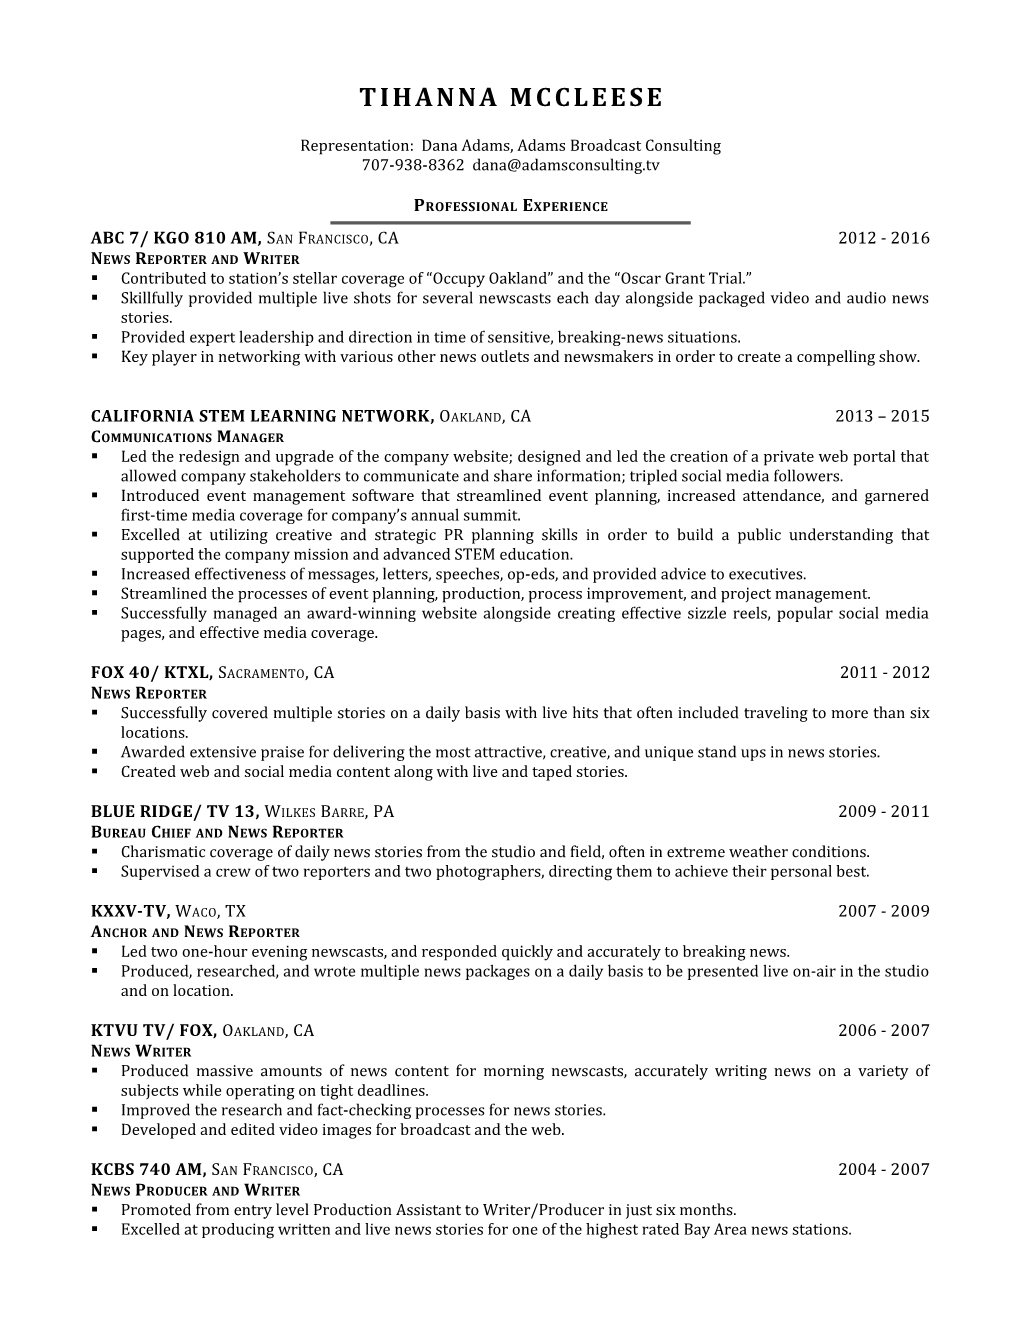 Tihanna Mccleese's Standard Resume